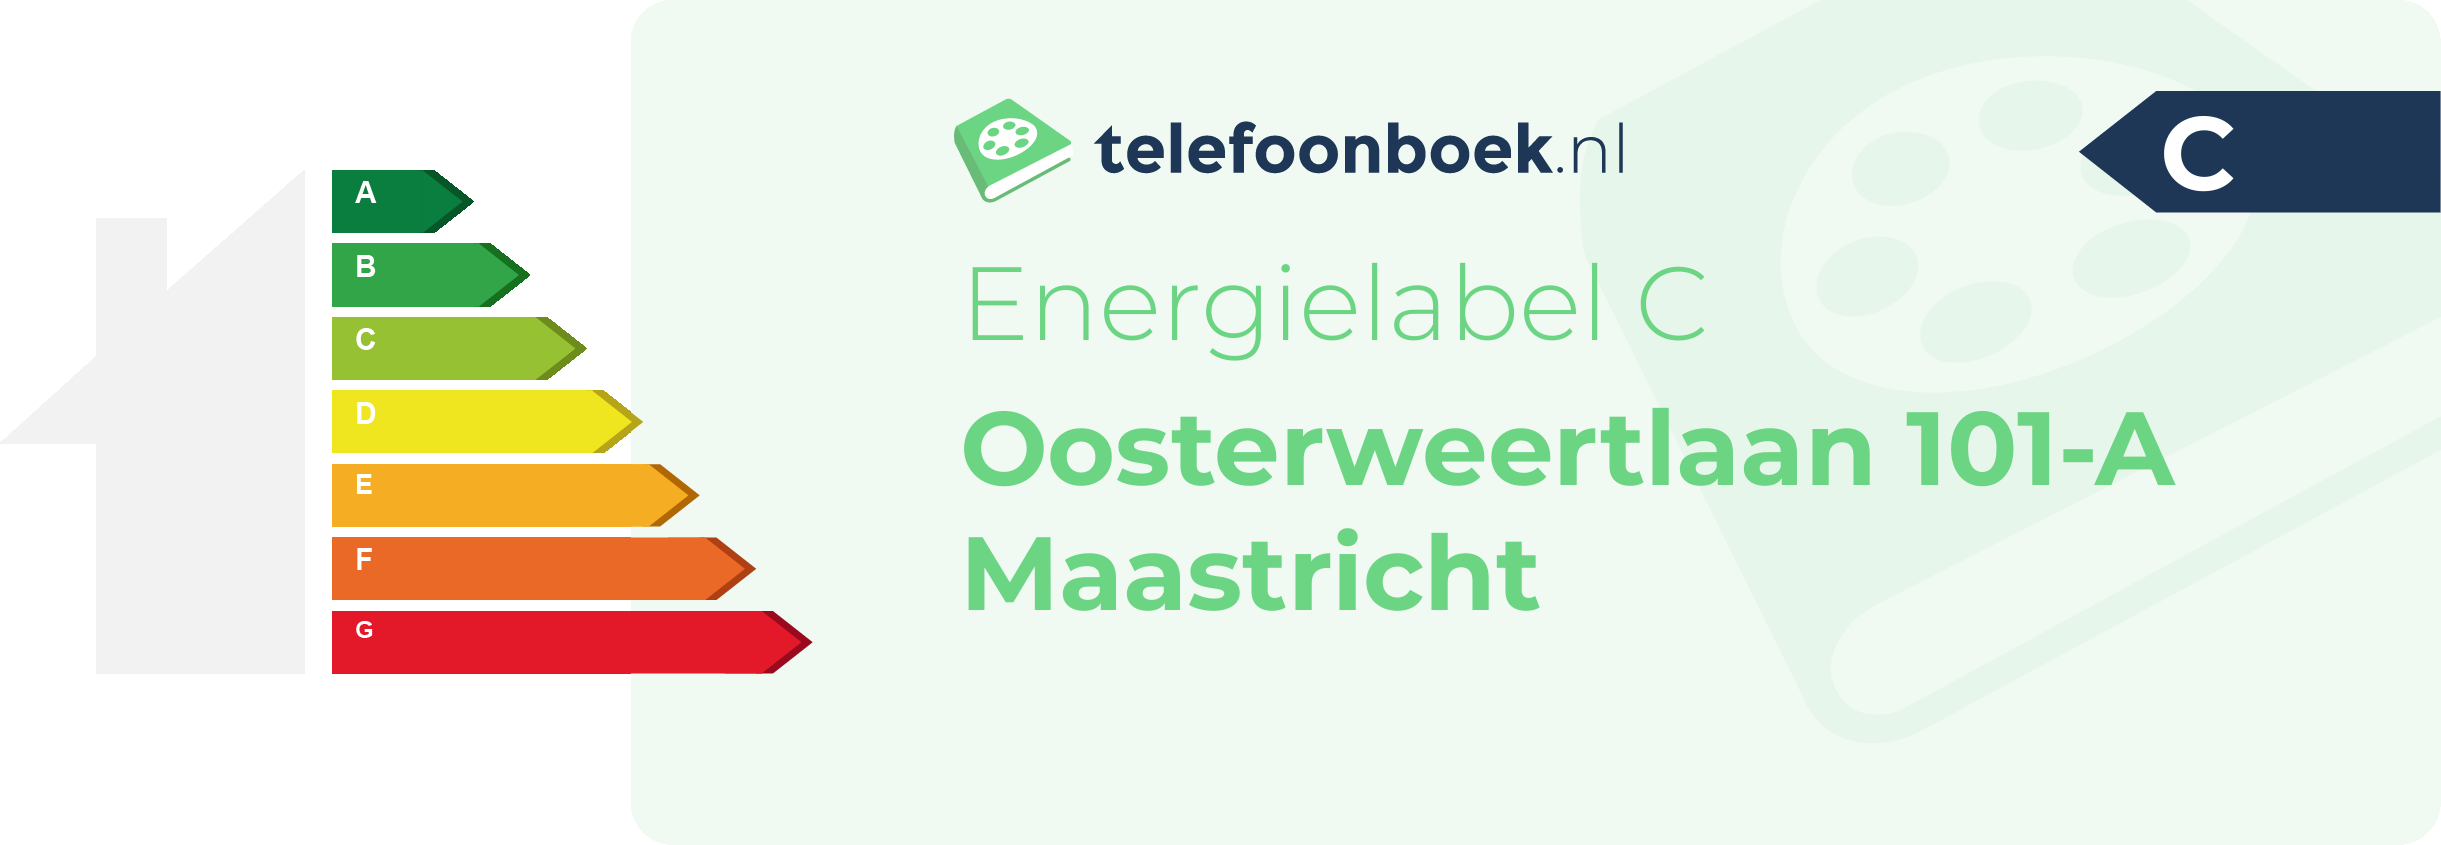 Energielabel Oosterweertlaan 101-A Maastricht